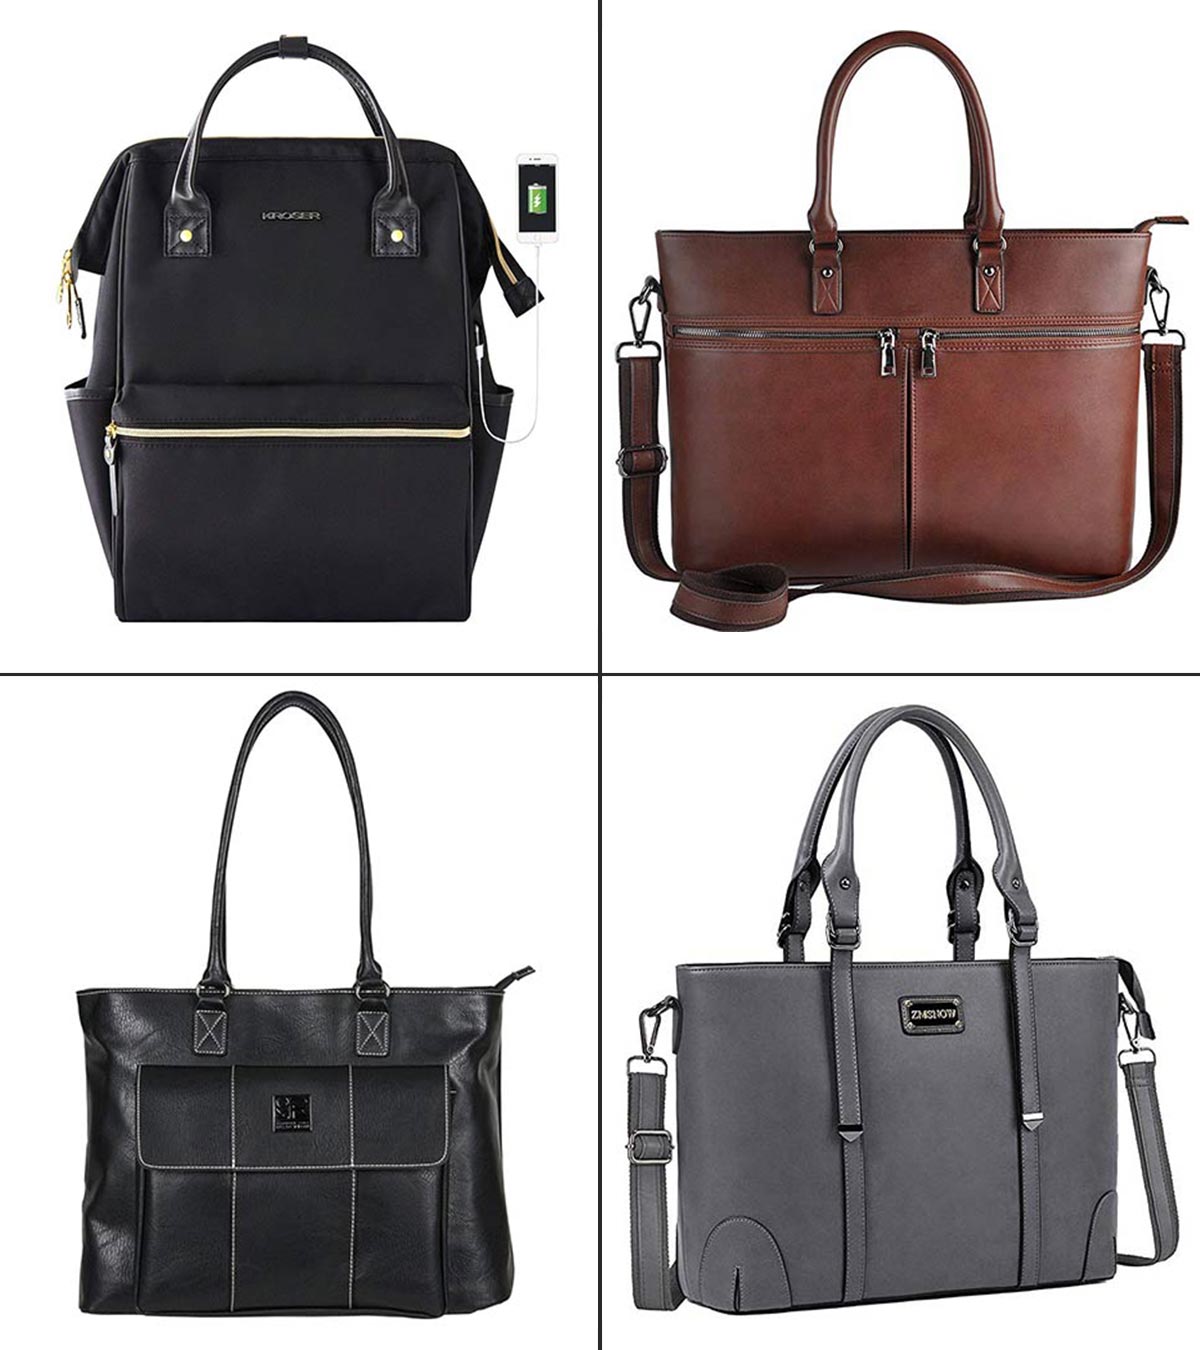 Hidesign Roma Tan Leather Briefcase Business Laptop Bag | eBay